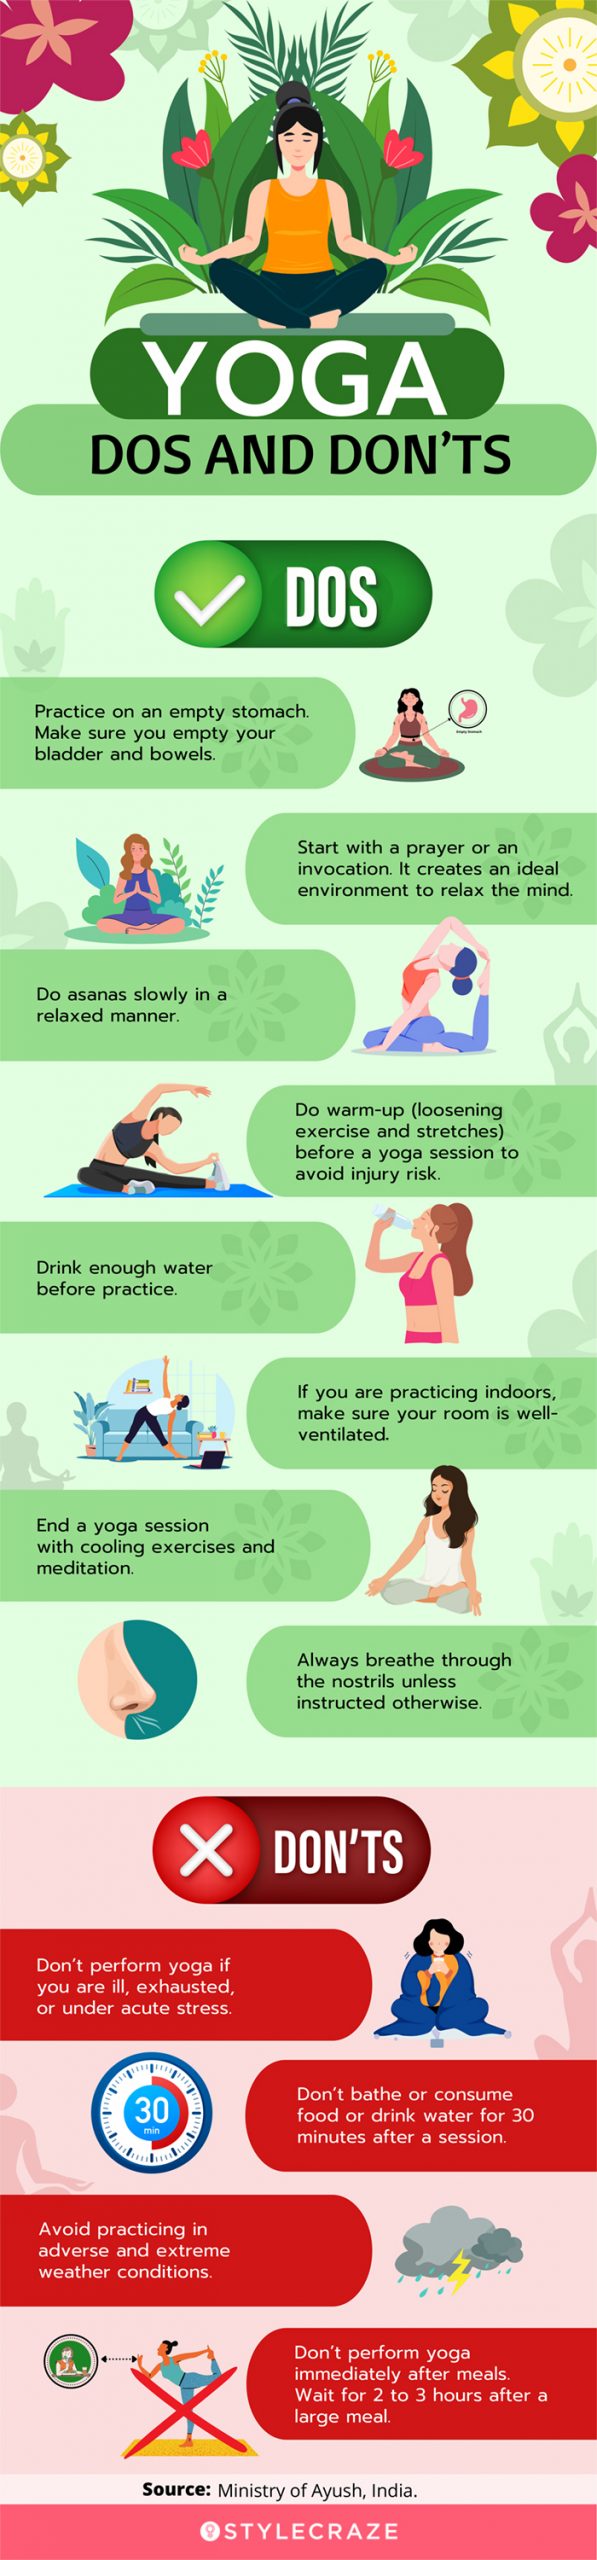 dos and don'ts yoga [infographic]